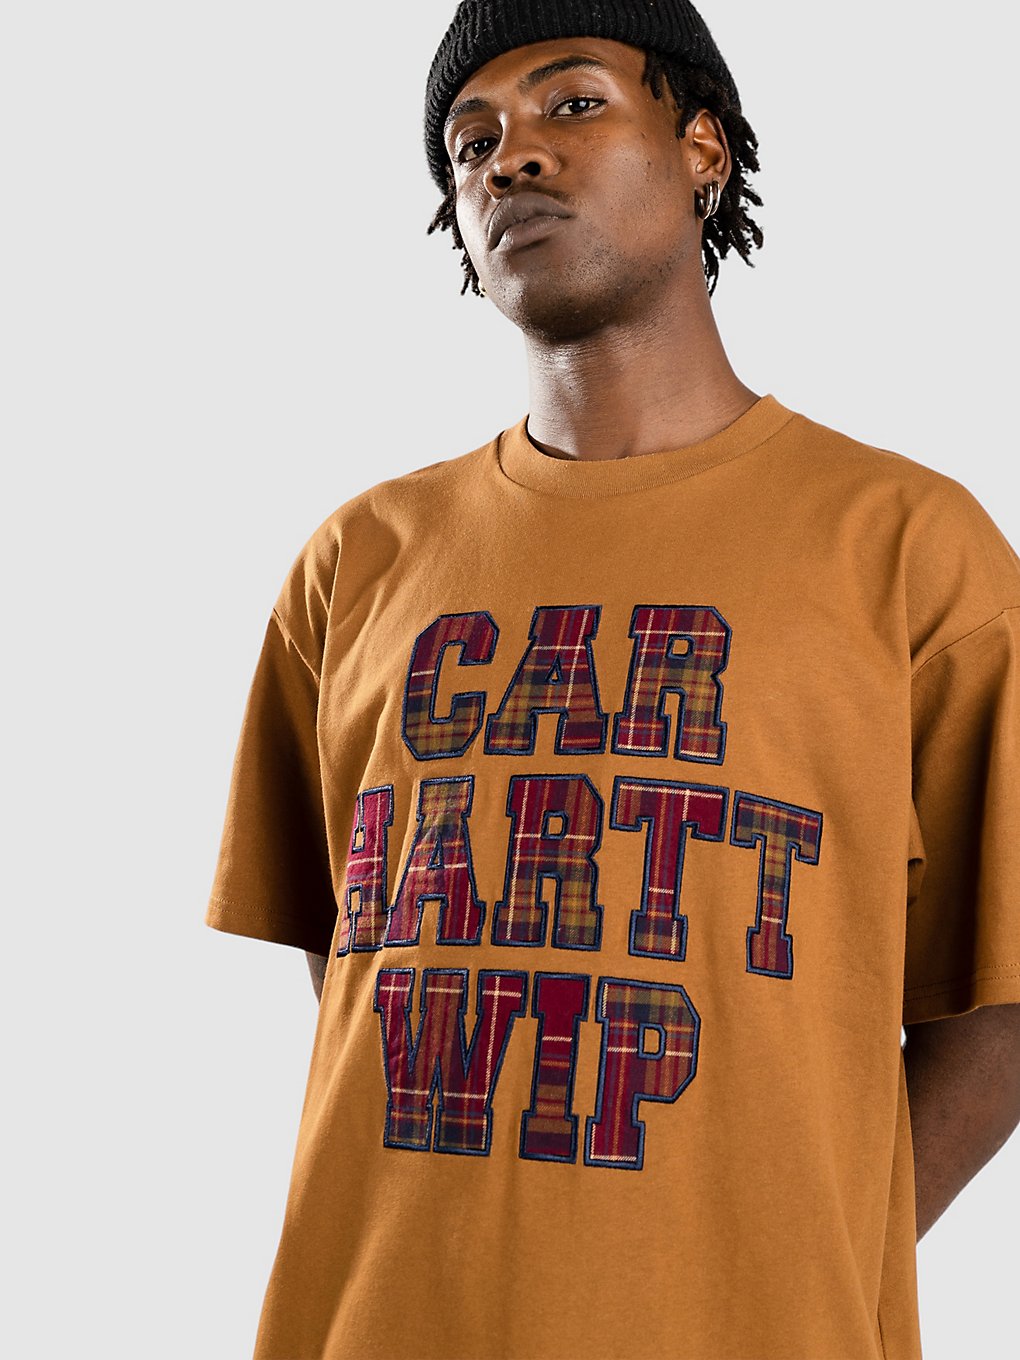 Carhartt WIP Wiles T-Shirt hamilton brown kaufen